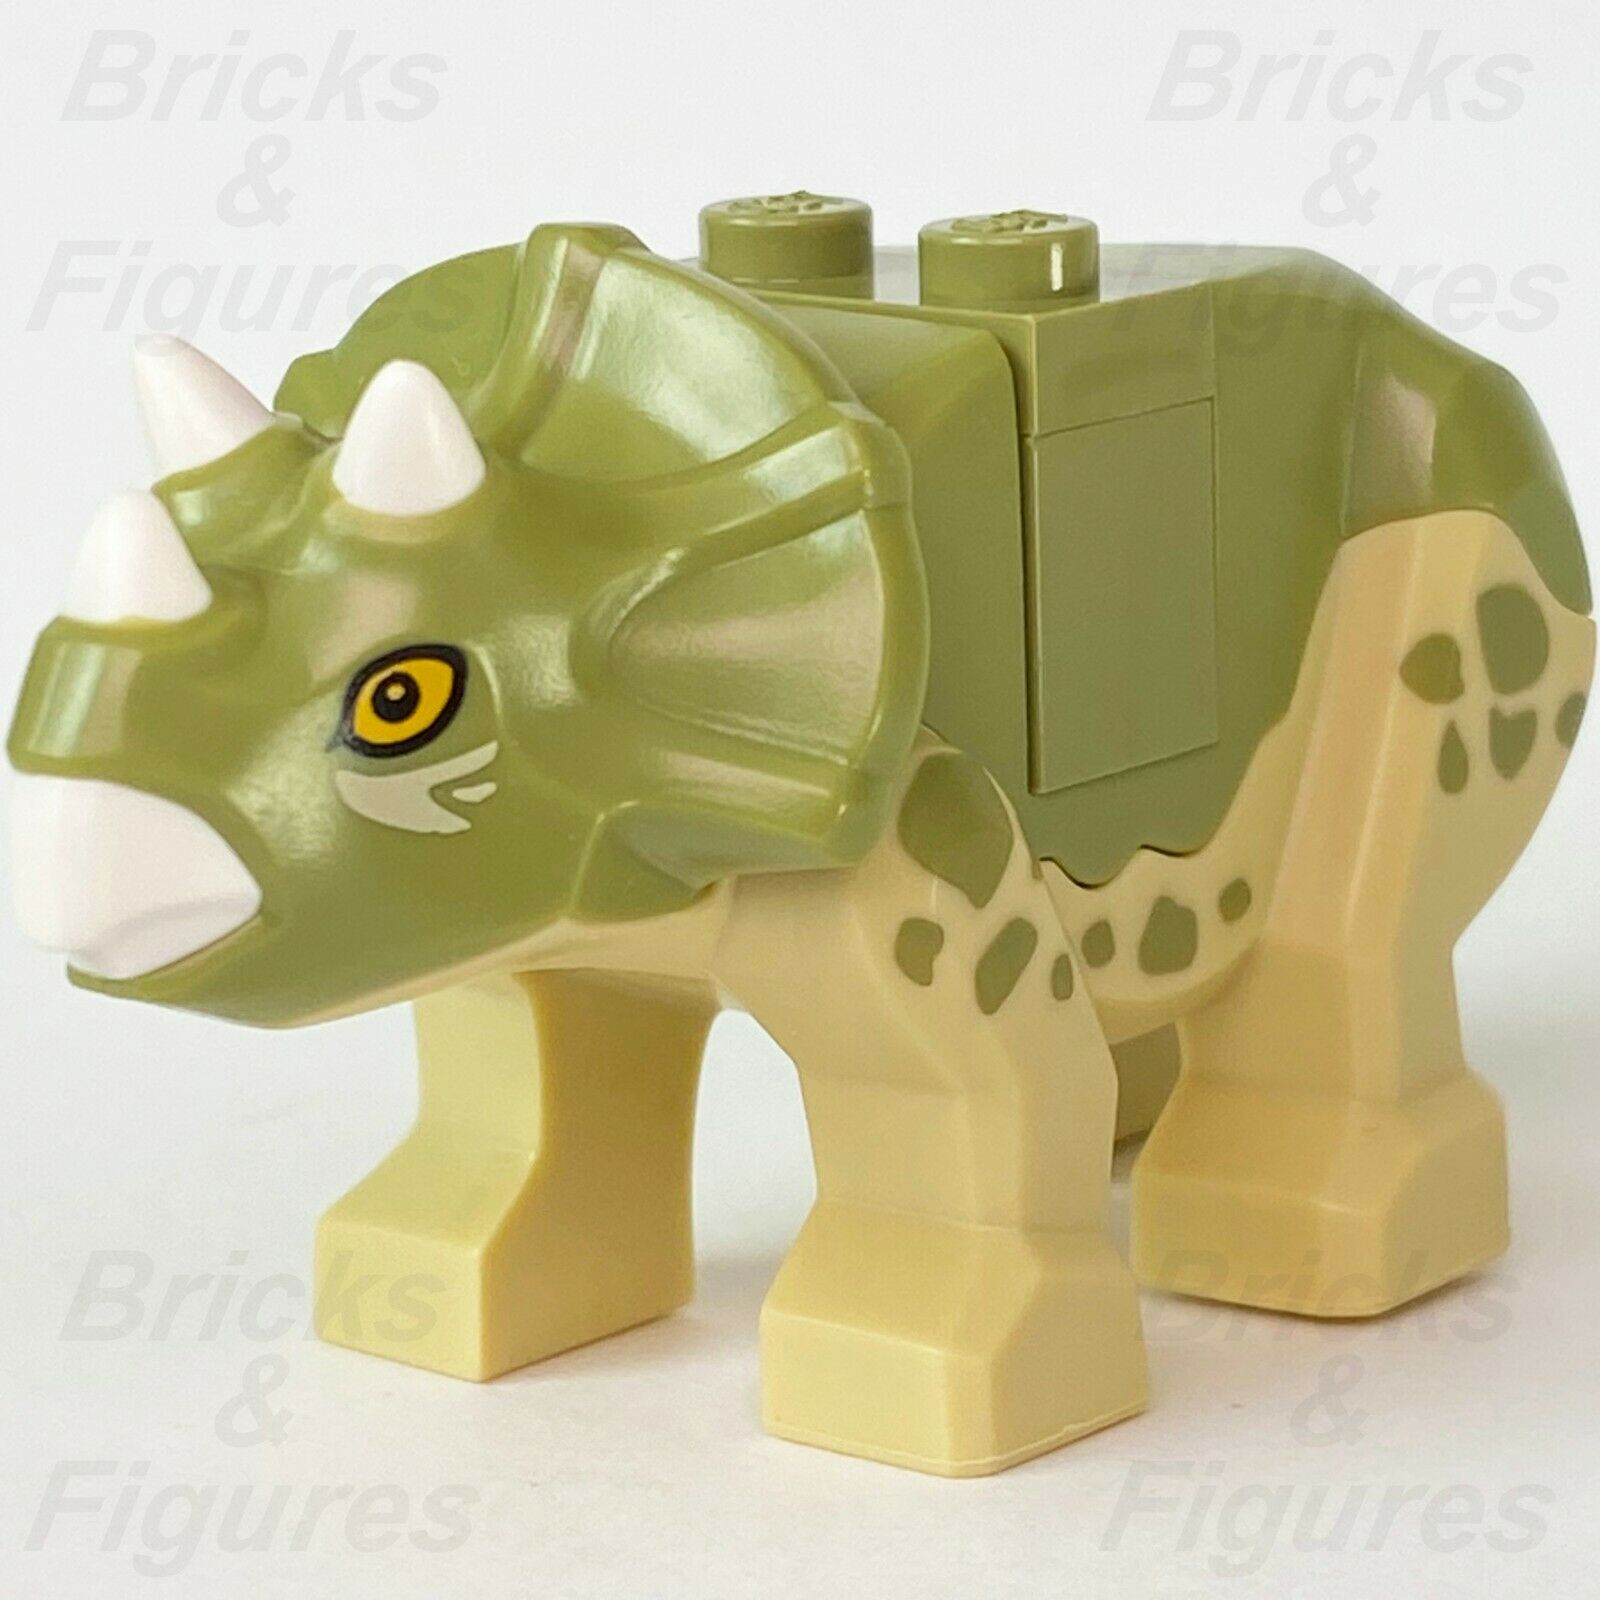 New Jurassic World LEGO Baby Triceratops Dinosaur from set 75939 - Bricks & Figures